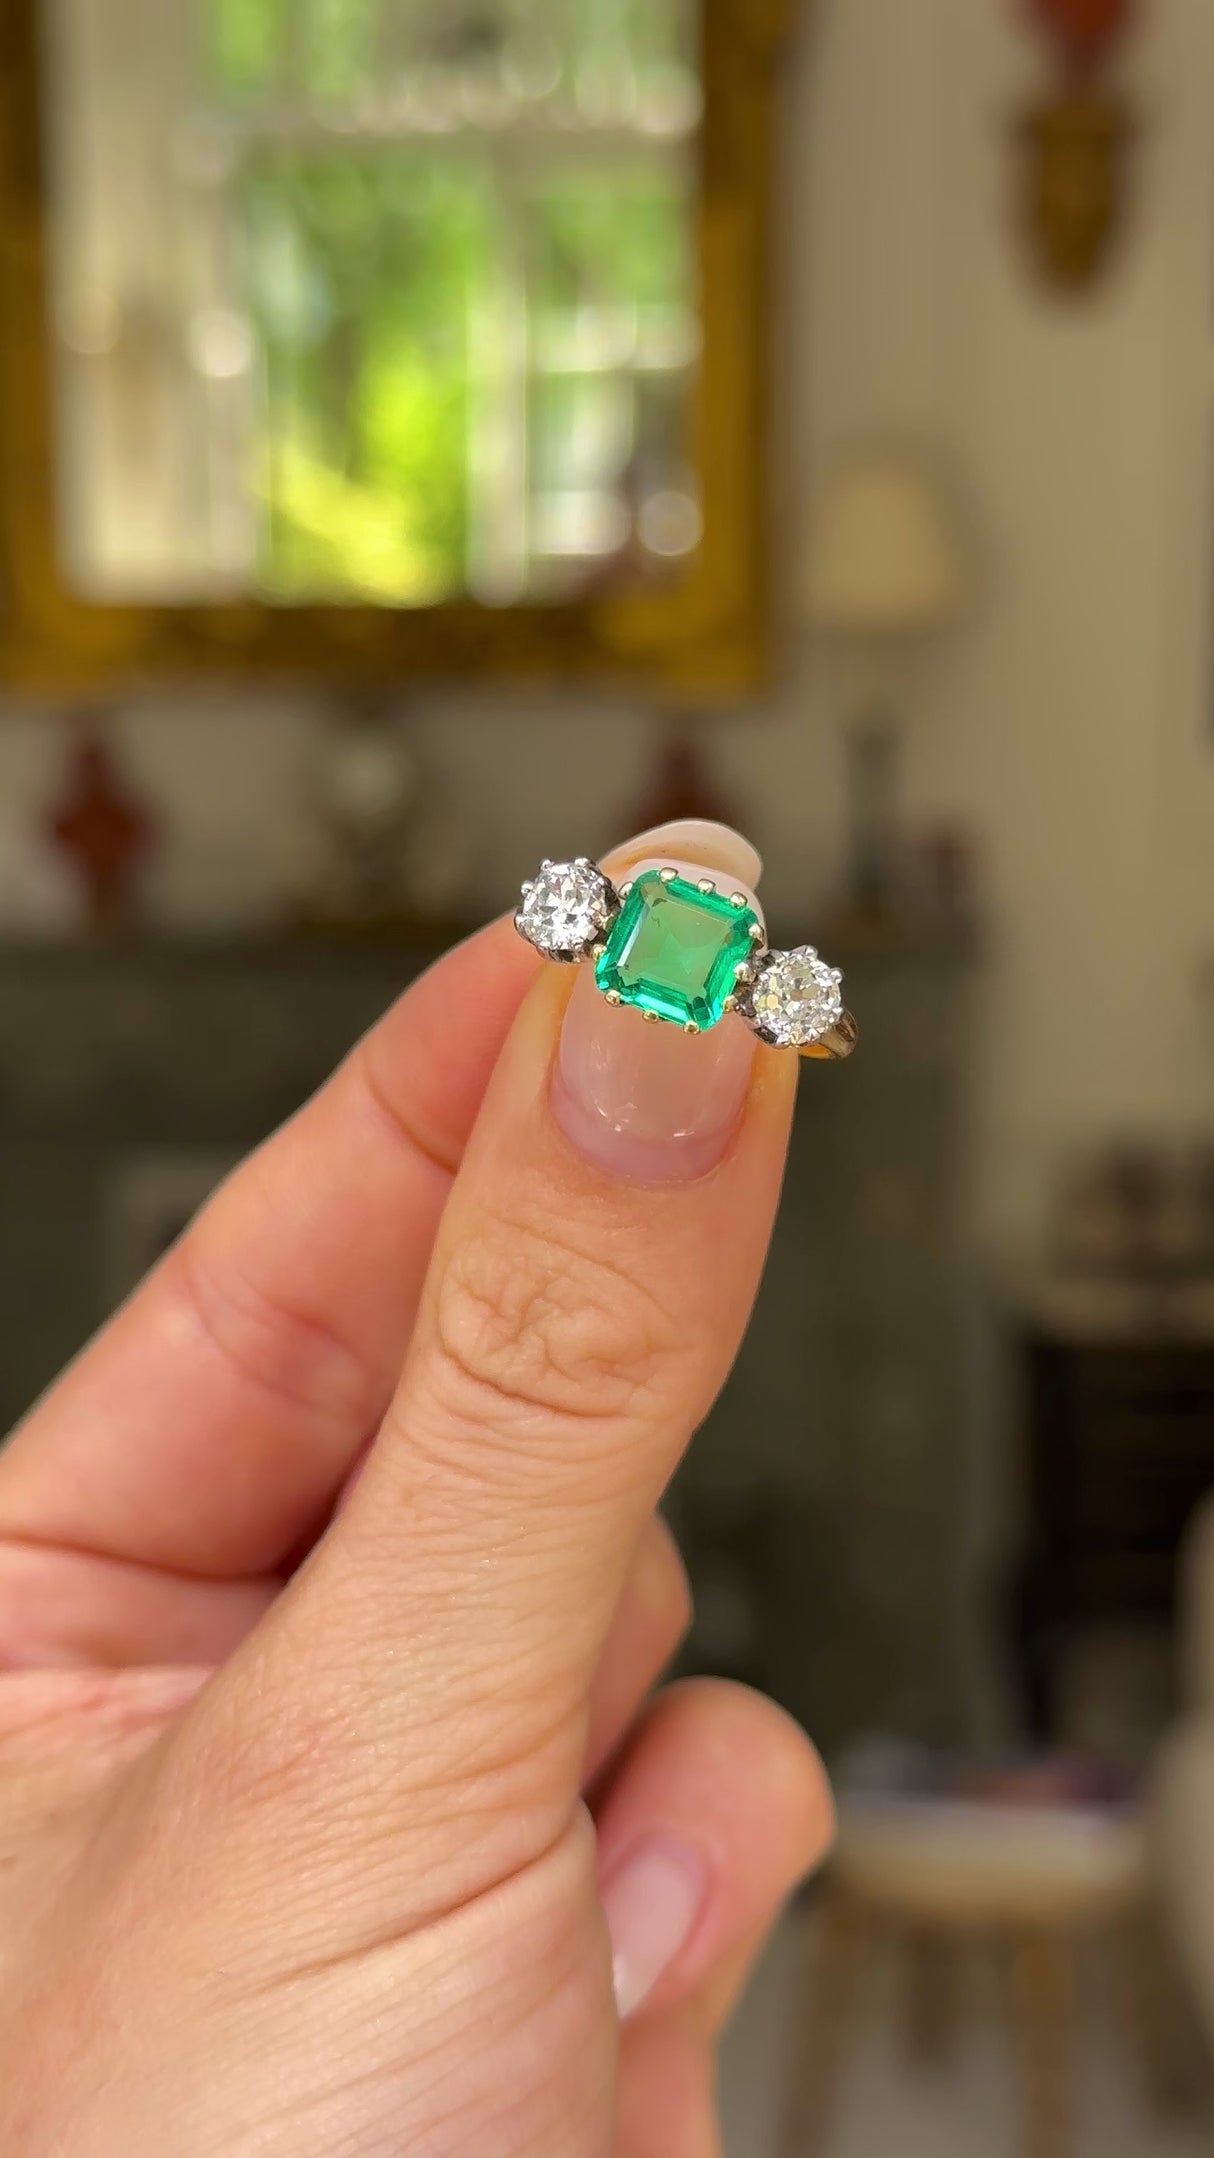 Victorian, Emerald and Diamond Three Stone Ring, 18ct Yellow Gold